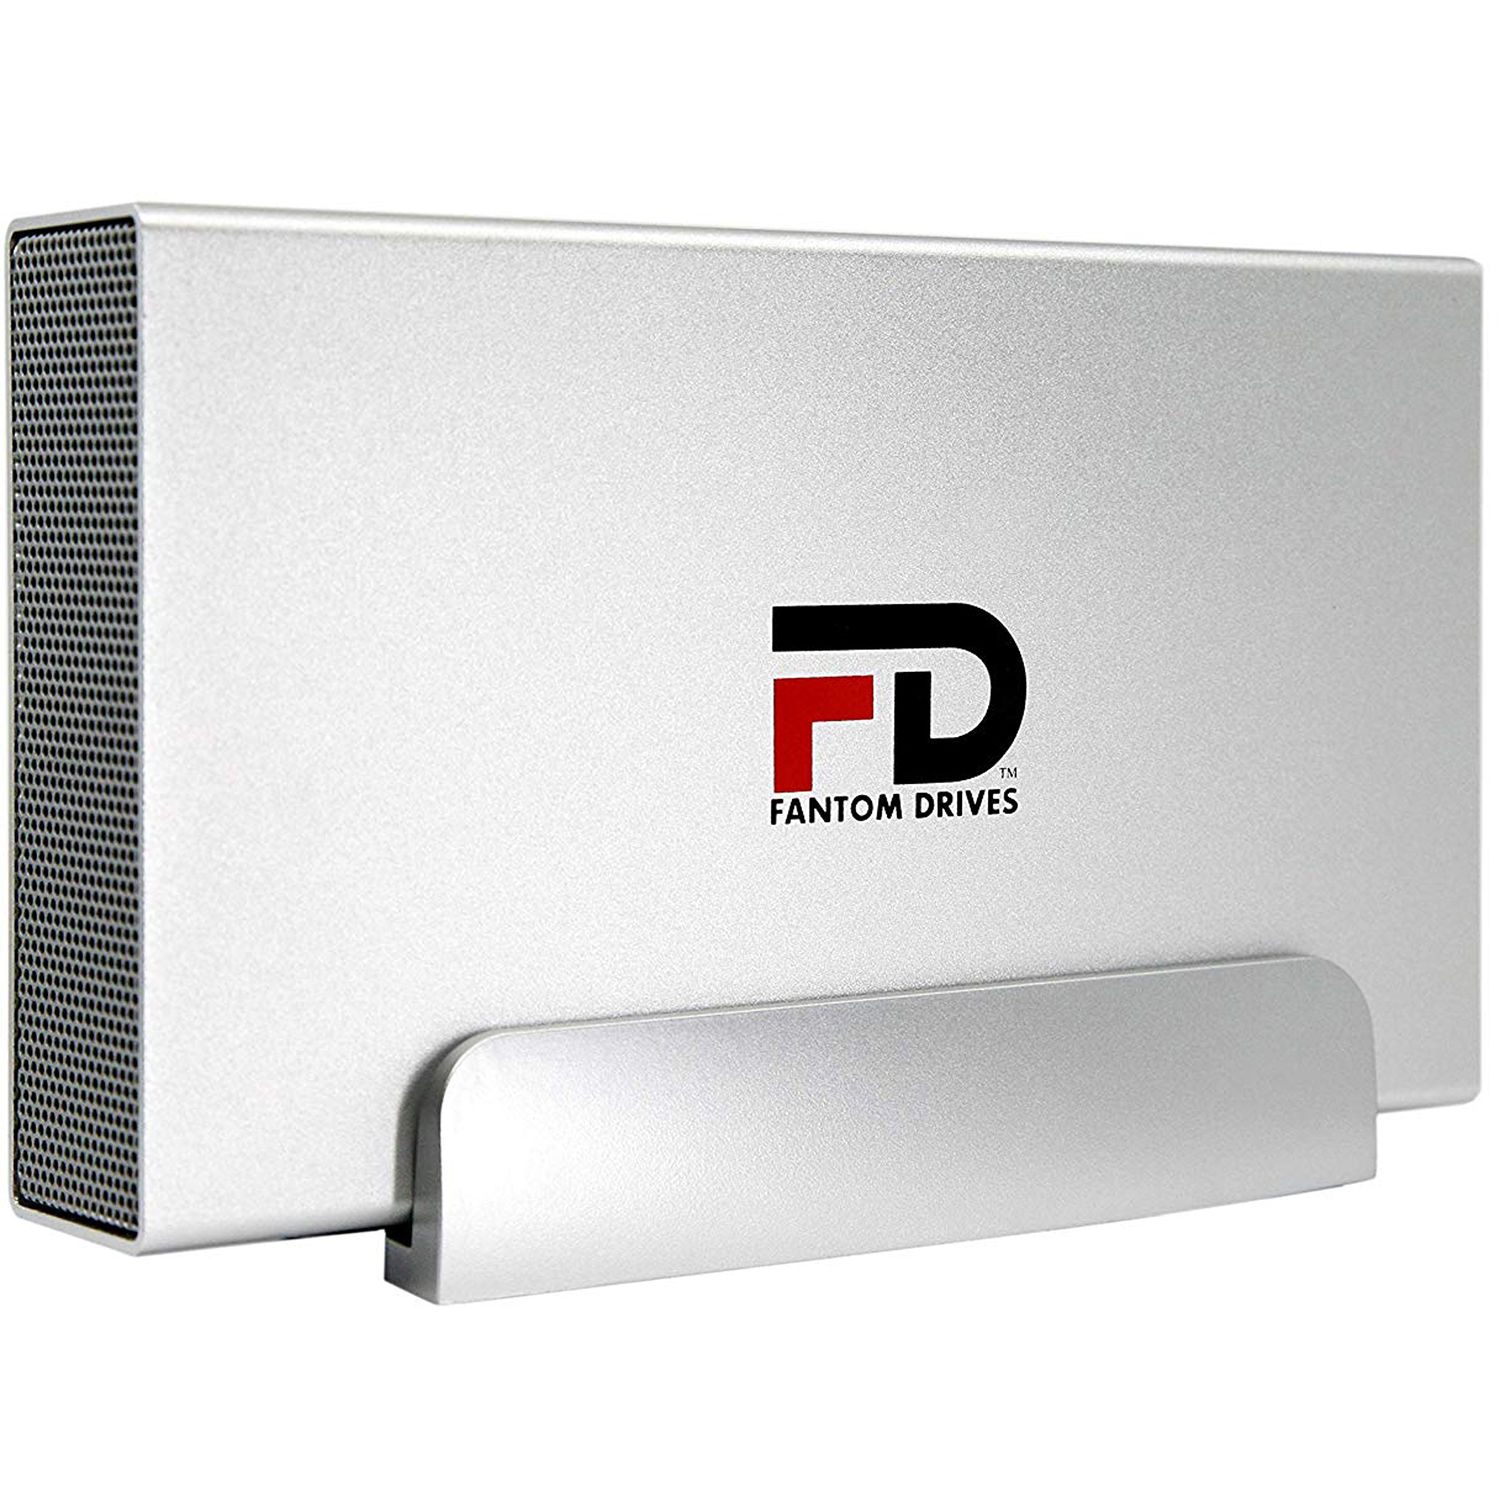 Fantom 8TB G-Force3 USB 3.0 External Hard Drive (Silver)